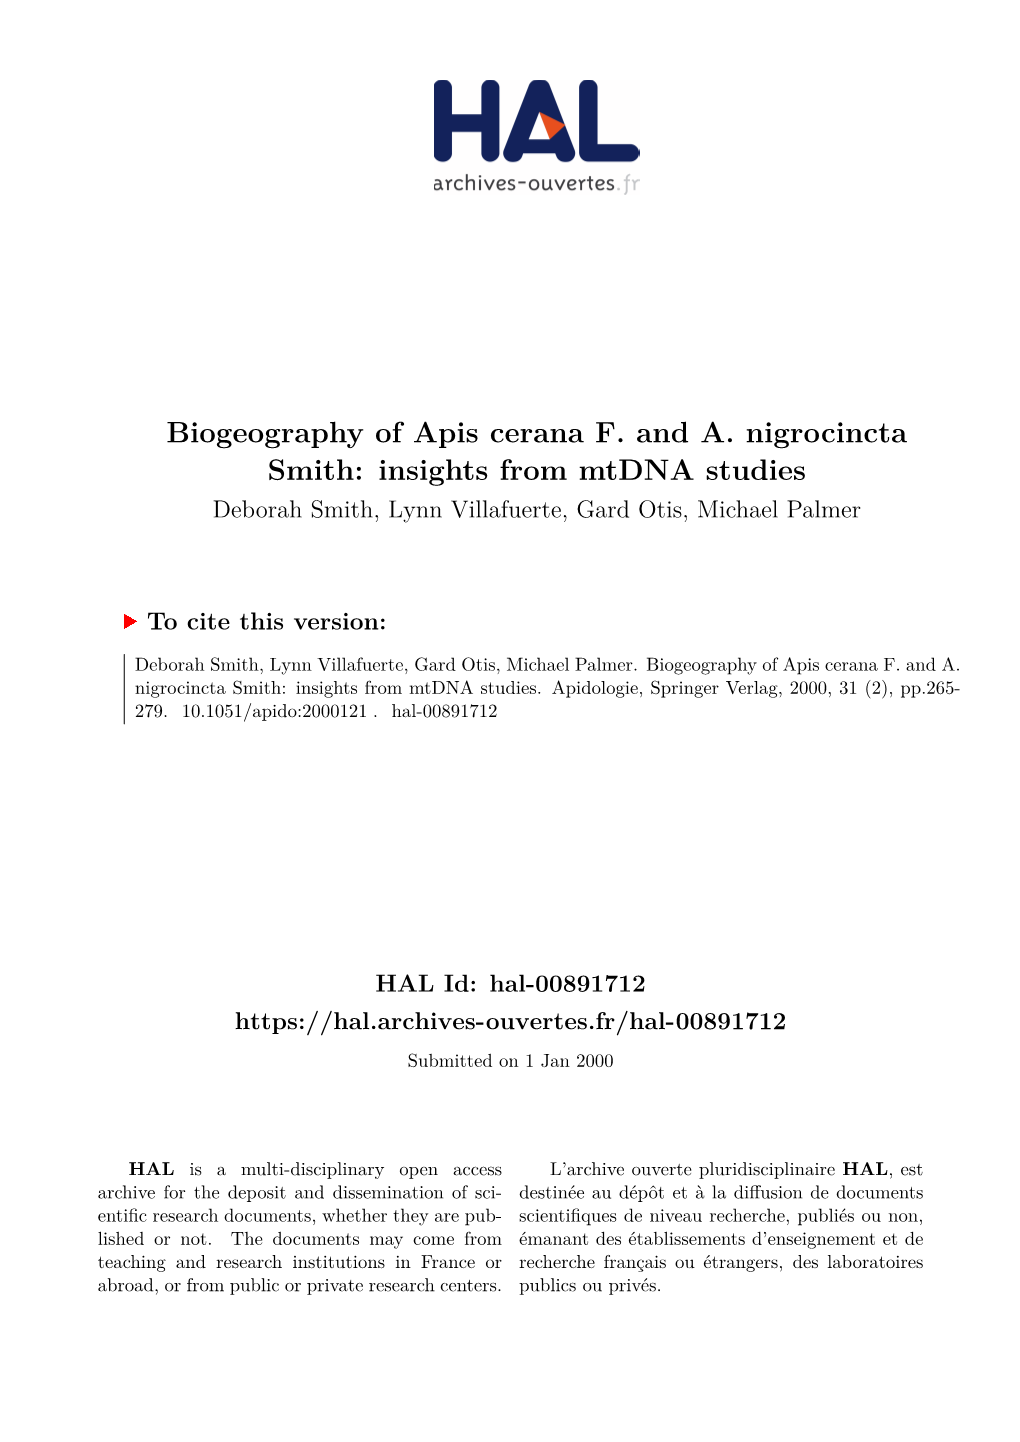 Biogeography of Apis Cerana F. and A